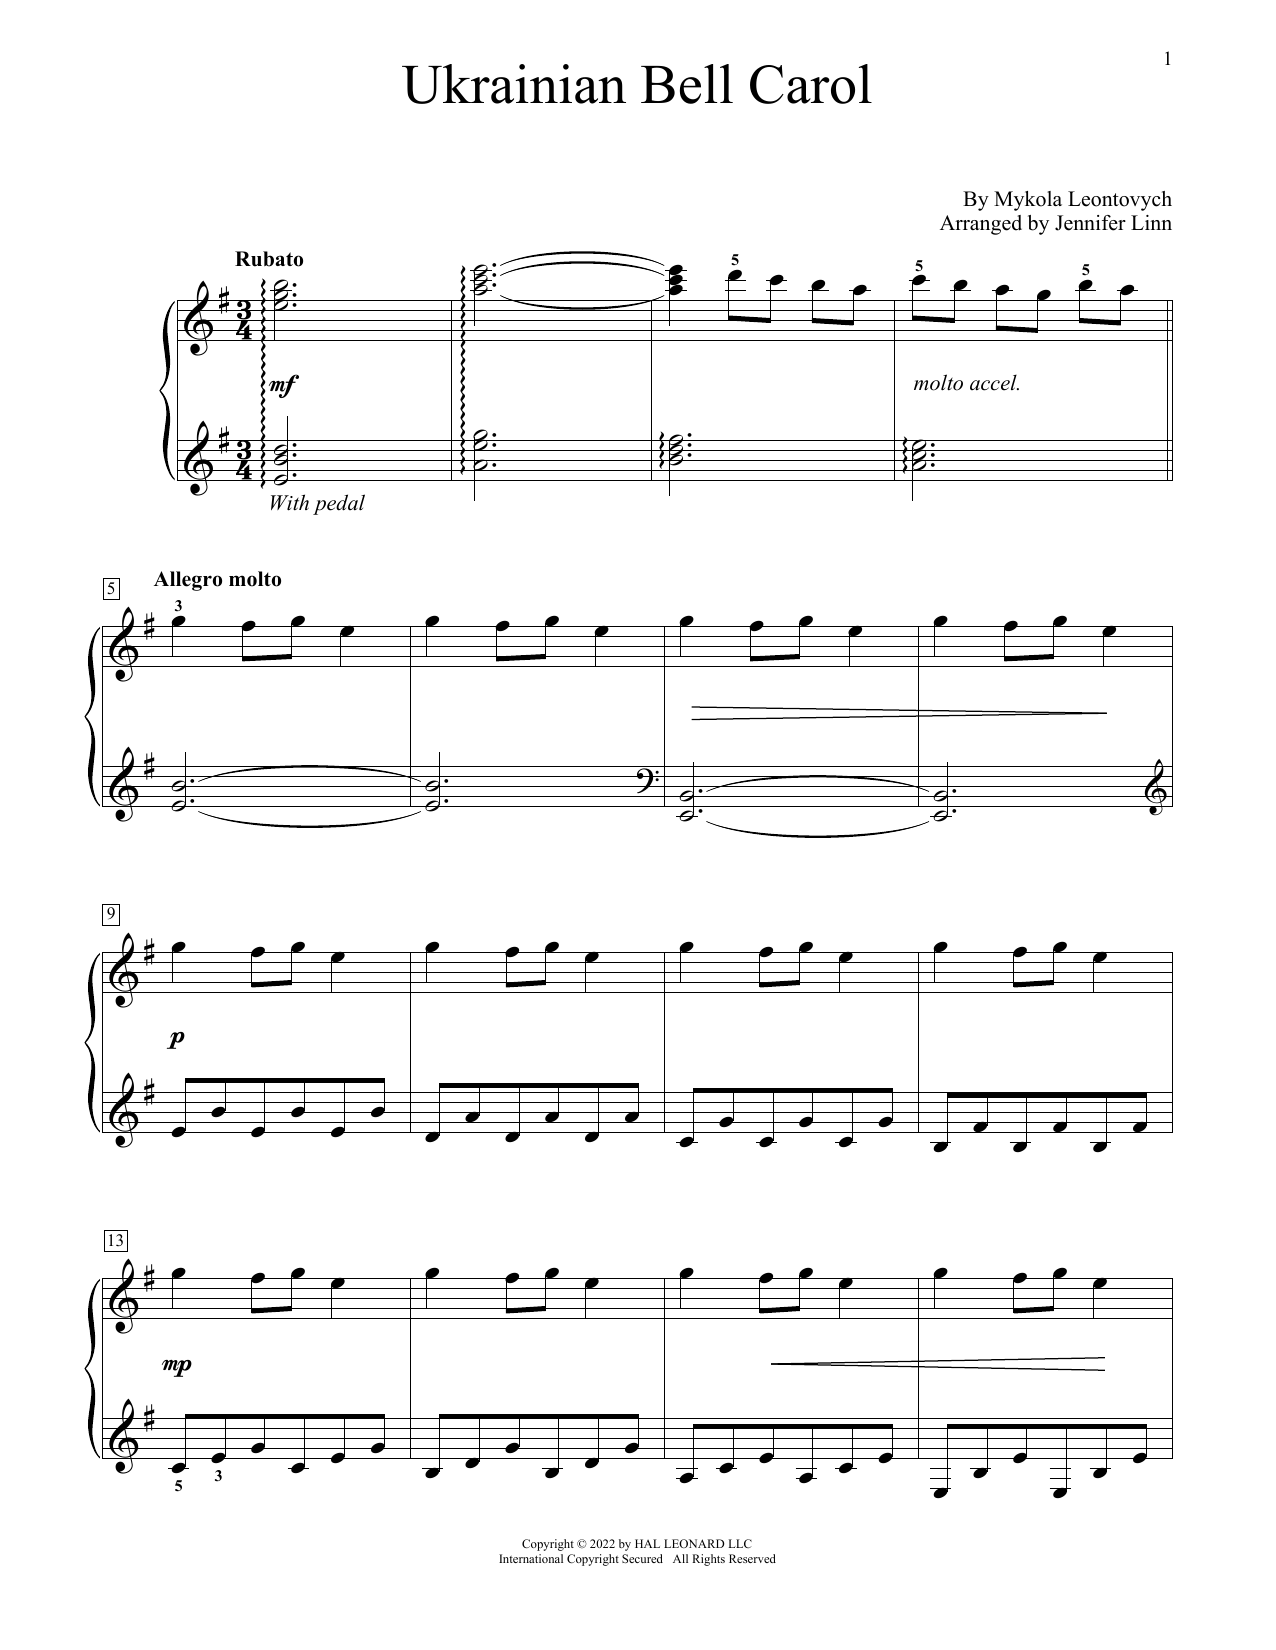 Download Mykola Leontovych Ukrainian Bell Carol (arr. Jennifer Linn) Sheet Music and learn how to play Educational Piano PDF digital score in minutes